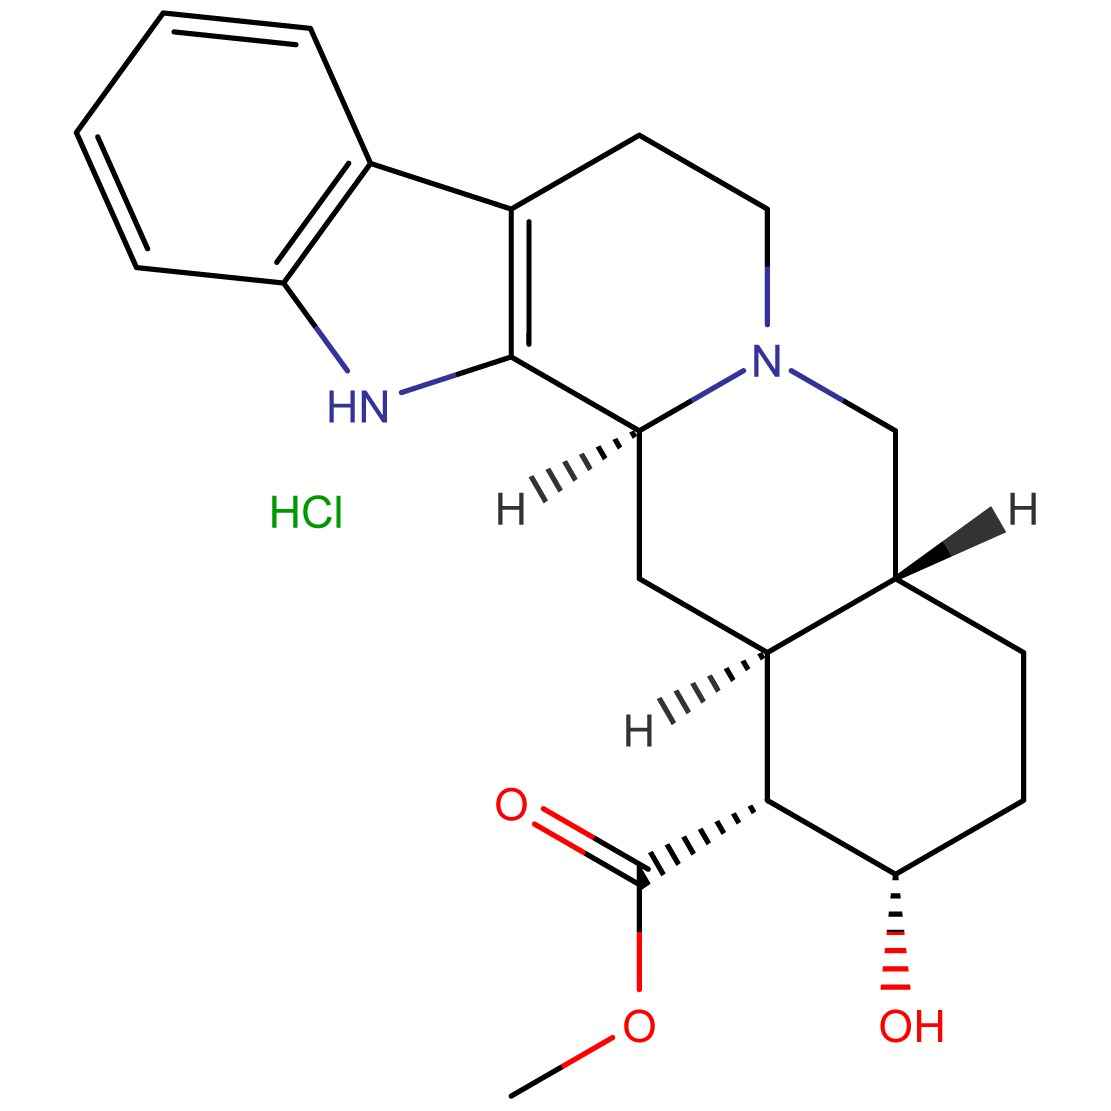 Yohimbine hydrochloride CAS 65-19-0